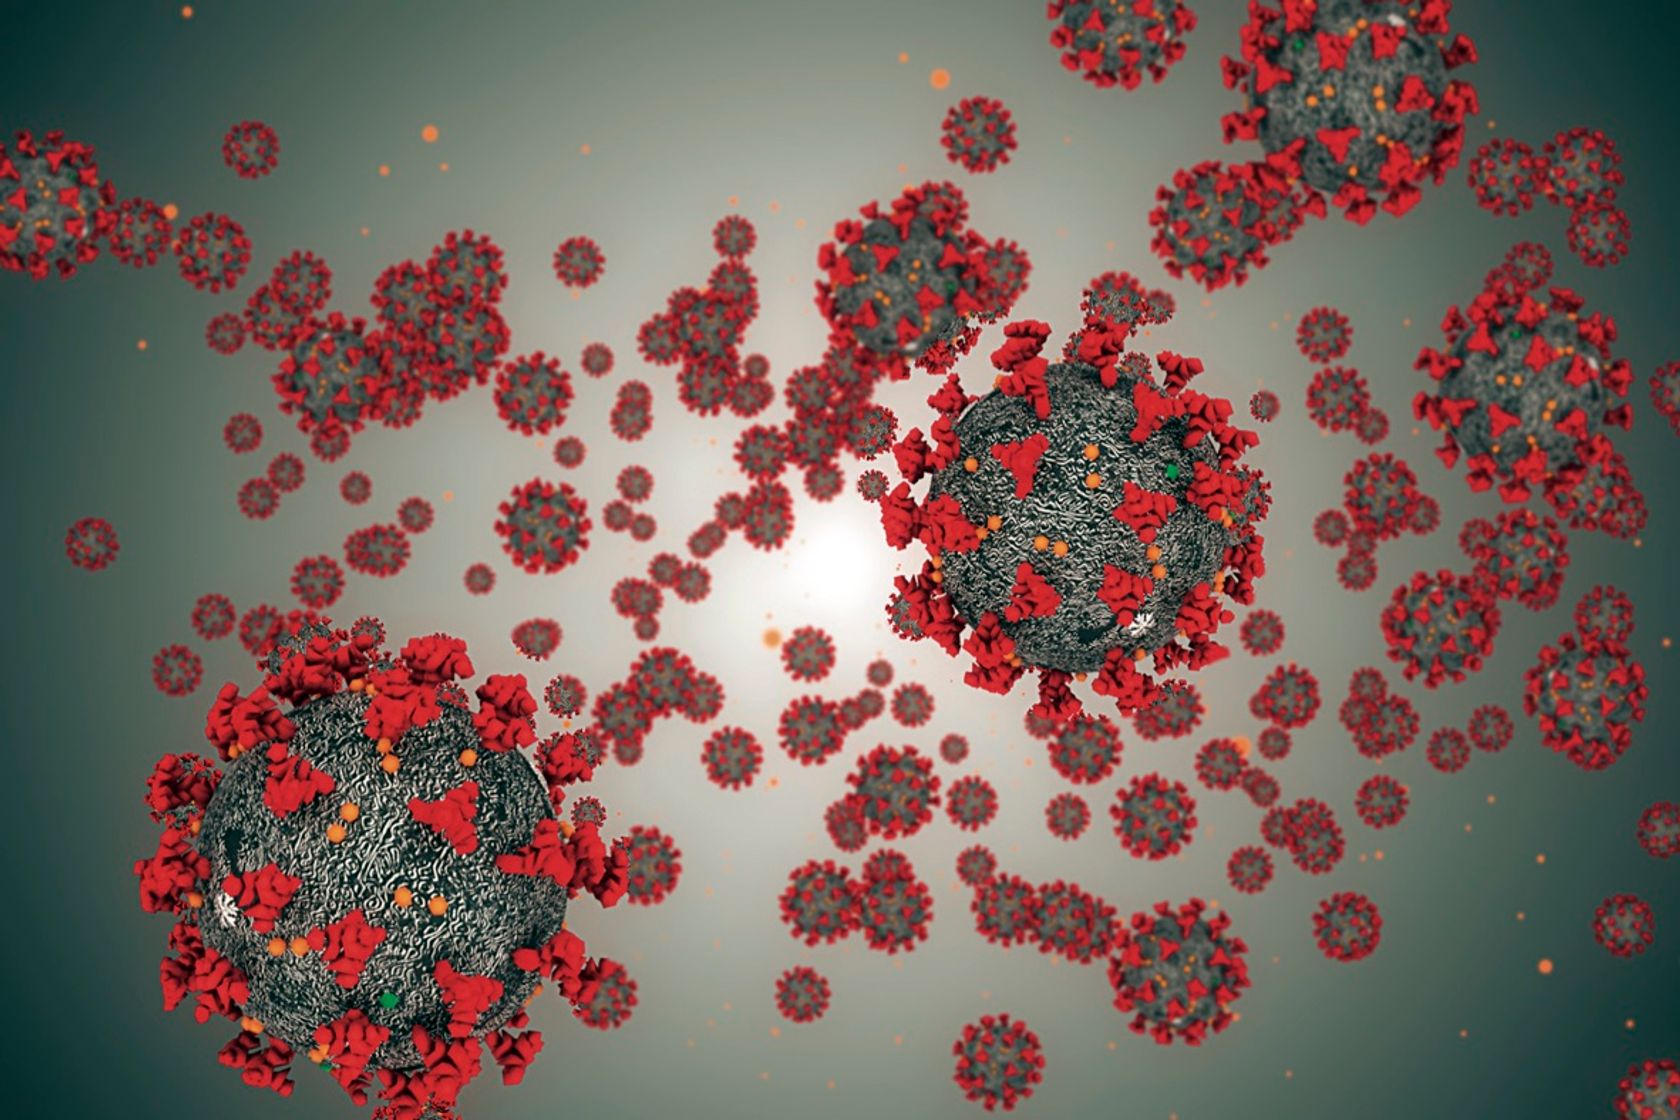 Corona-Viren mit Computergrafik dargestellt